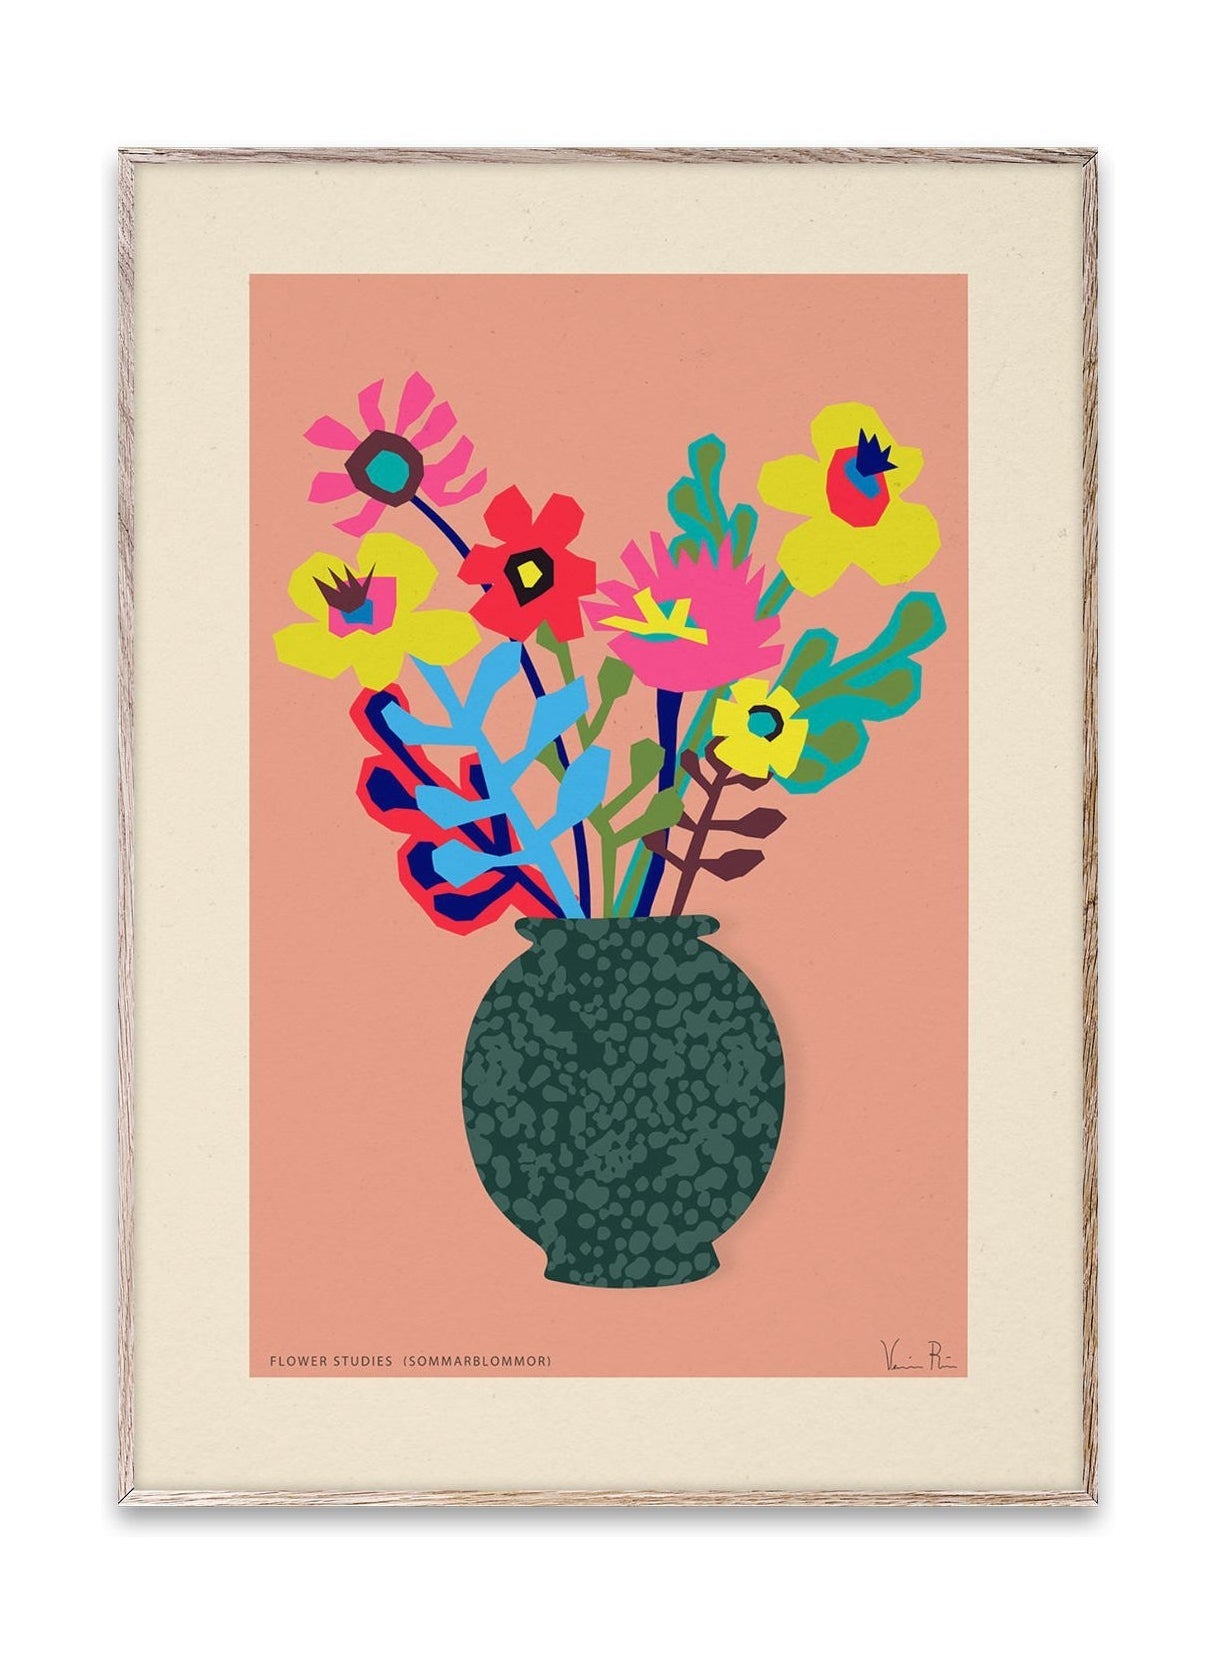 Paper Collective Flower Studies 02 (SomMarblommar) Affiche, 50x70 cm